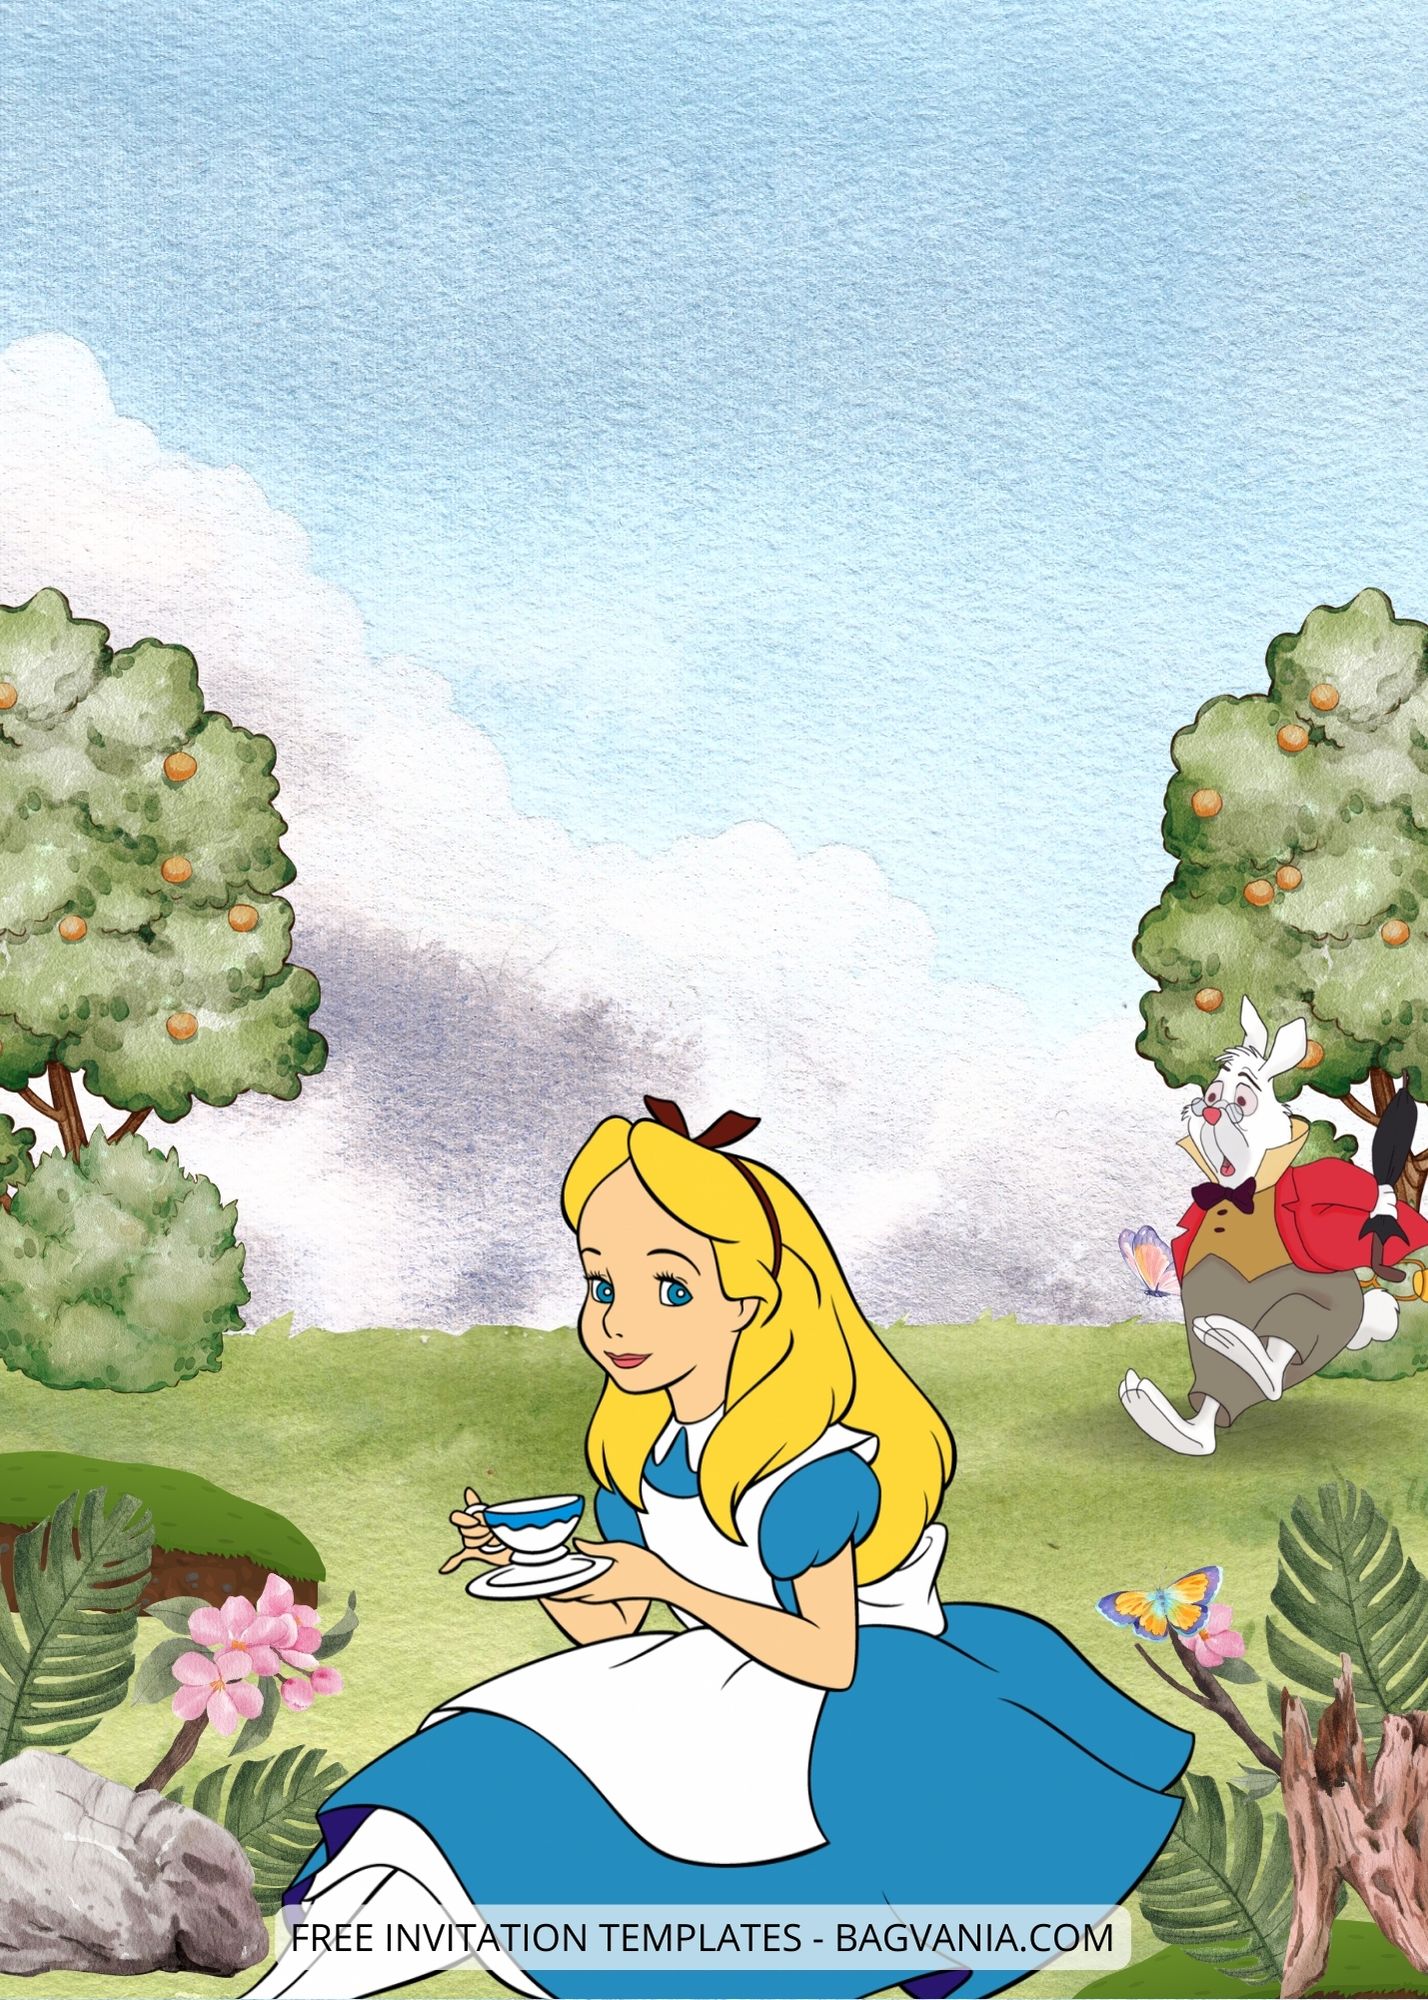 Alice in Wonderland instaling